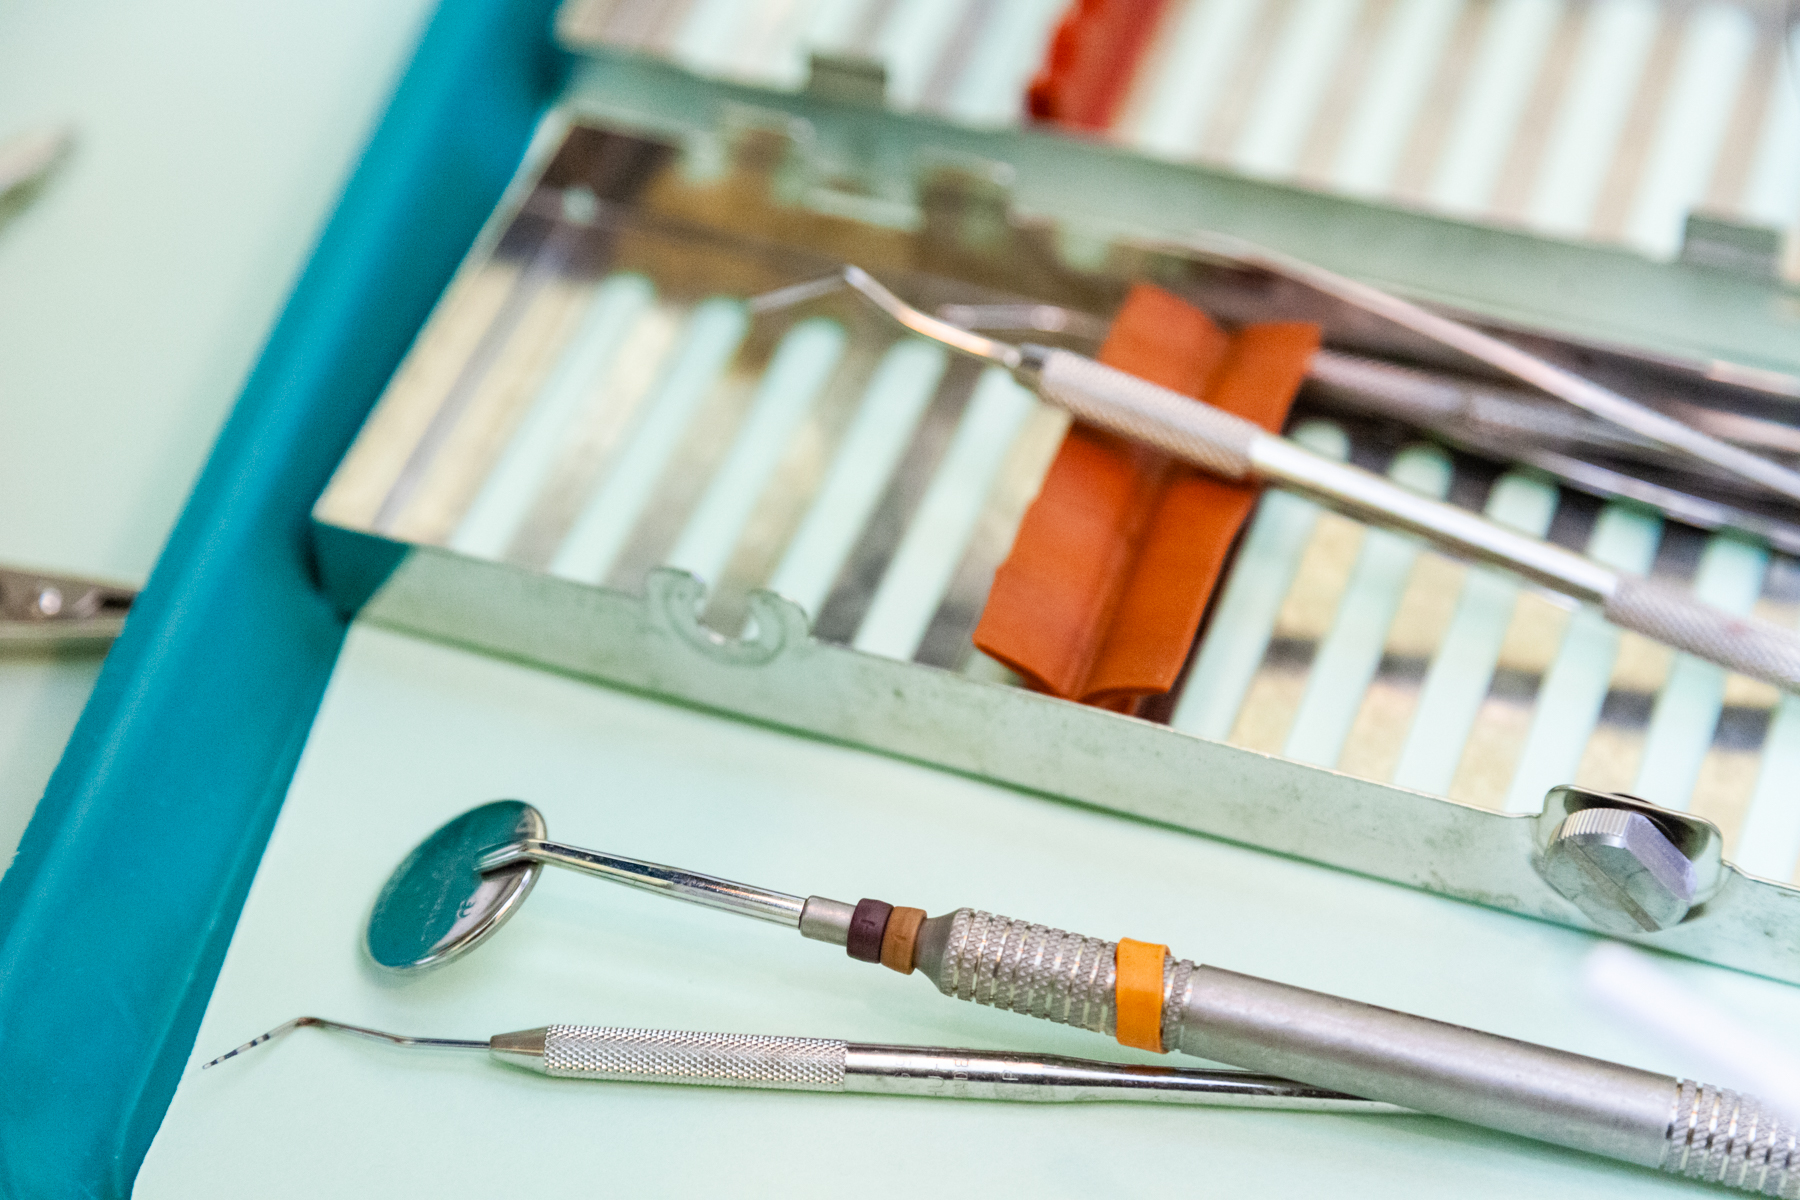 DIY Dentistry: A Dangerous Trend